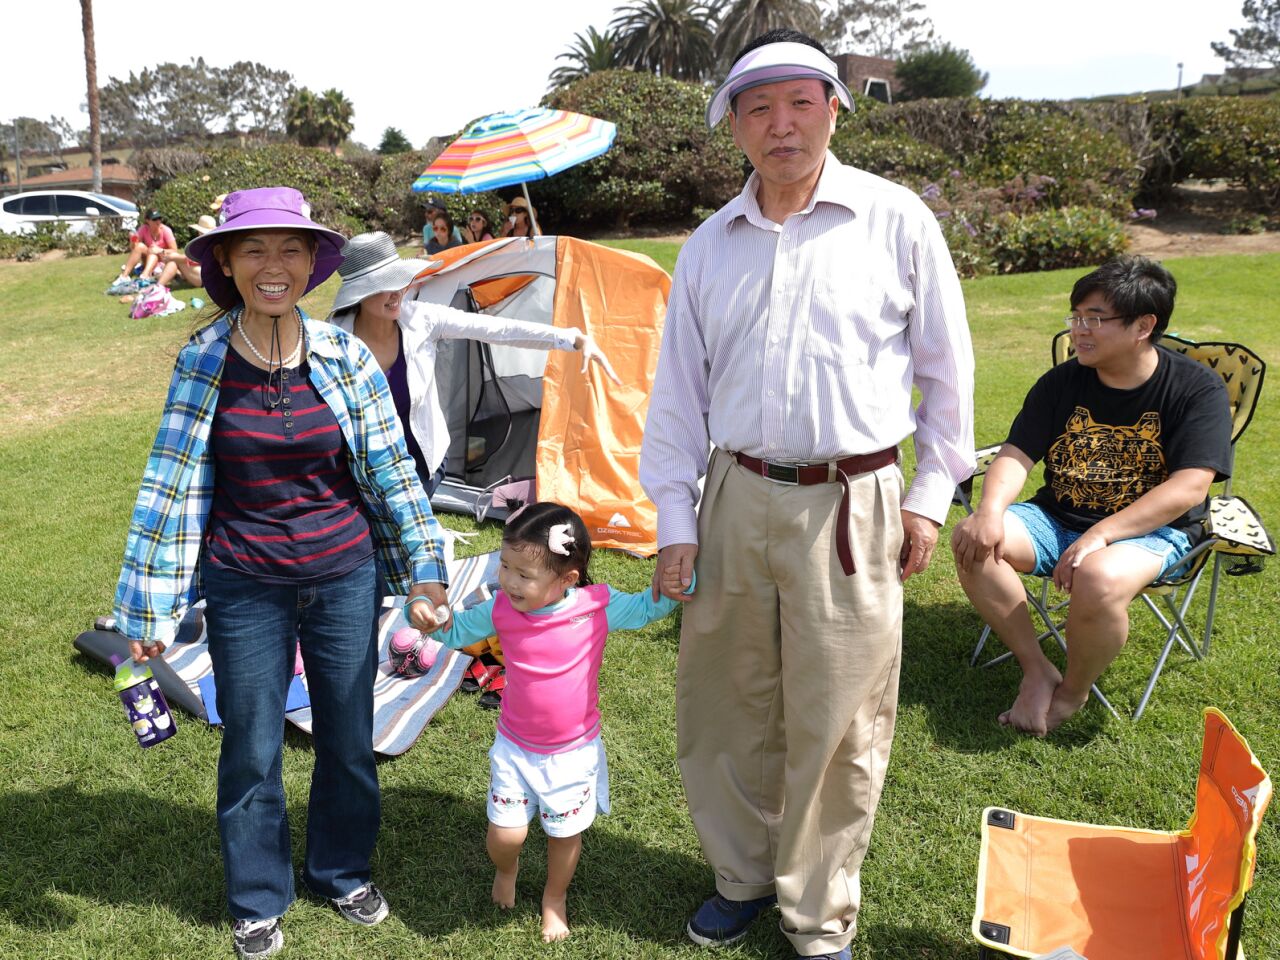 The Tian family enjoys the Del Mar Foundation picnic